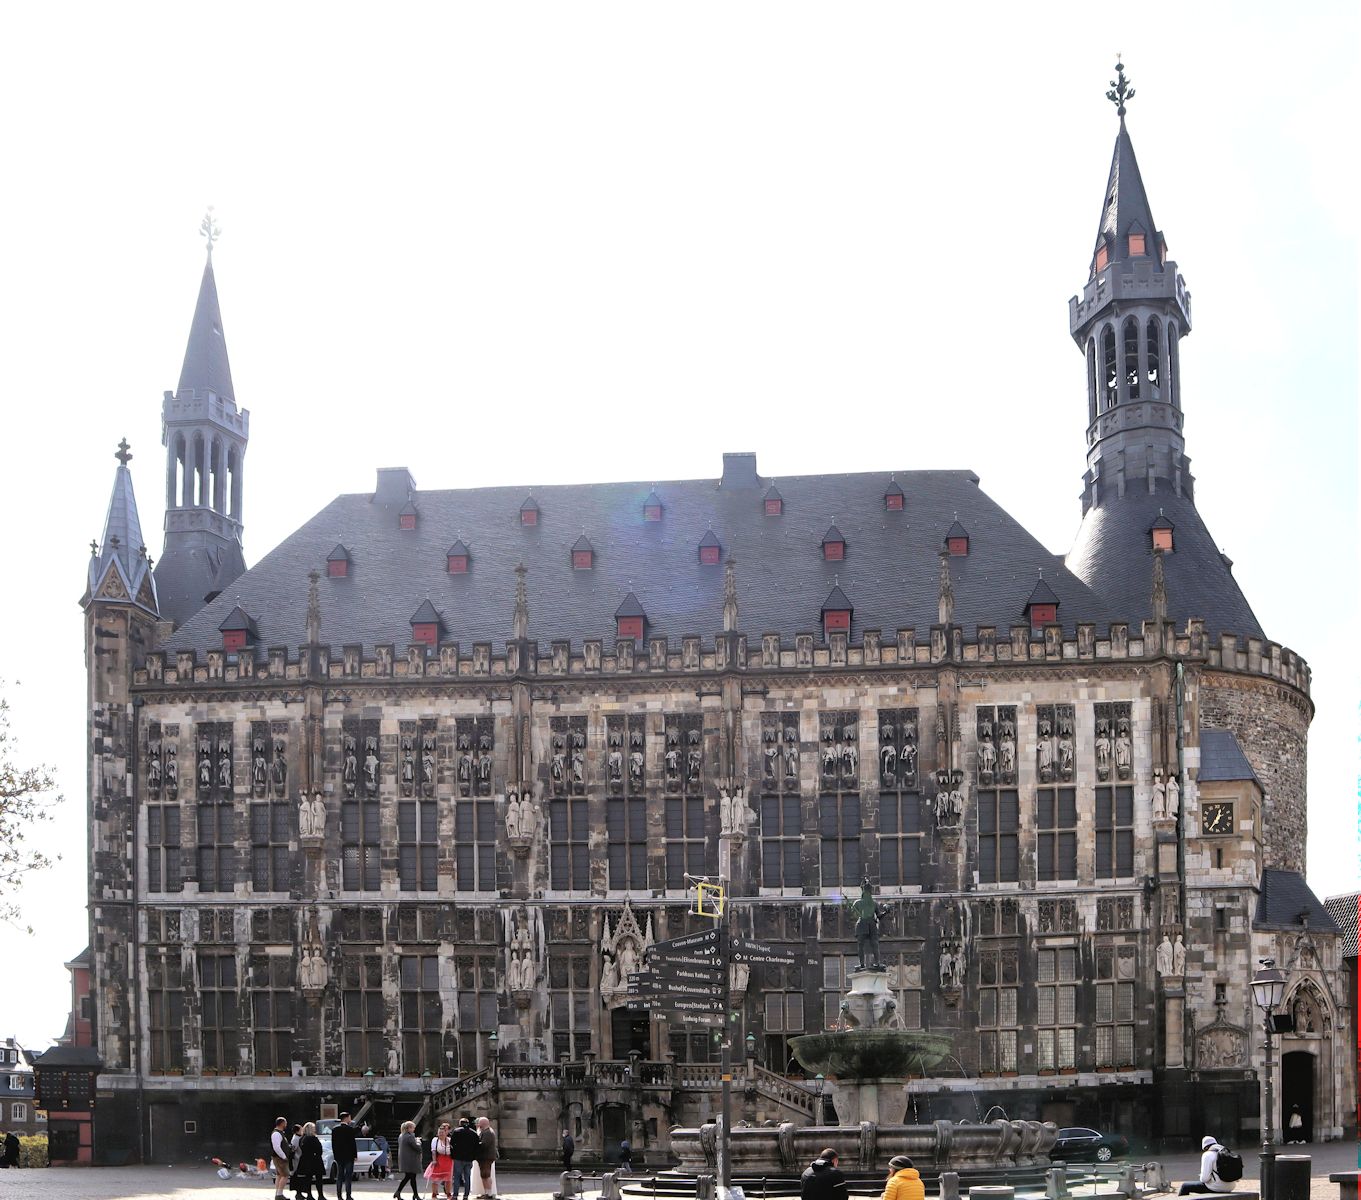 Rathaus, 1349 fertiggestellt an der Stelle der früheren Kaiserpfalz in Aachen